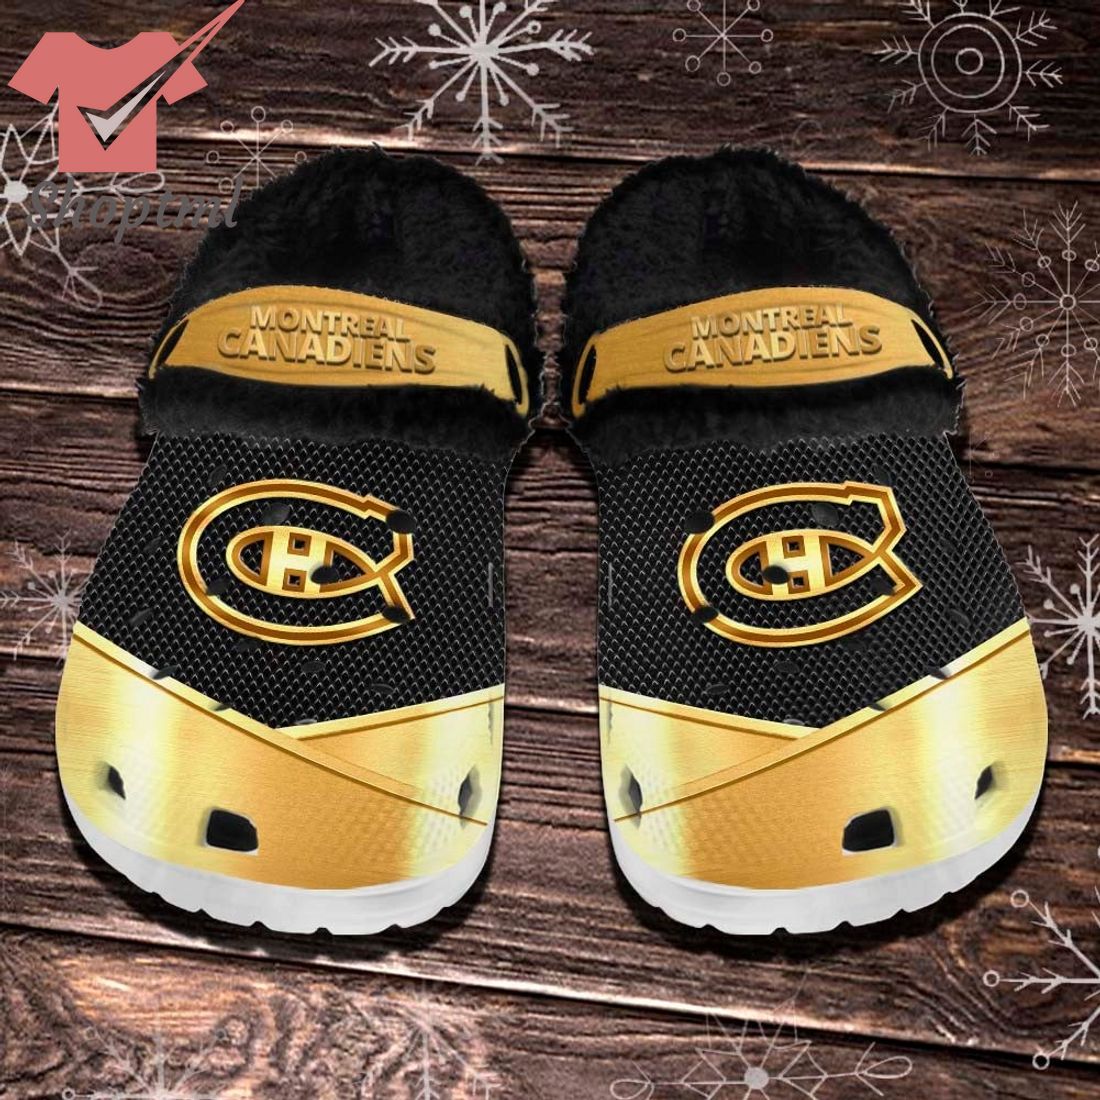 Montreal Canadiens NHL Fleece Crocs Clogs Shoes